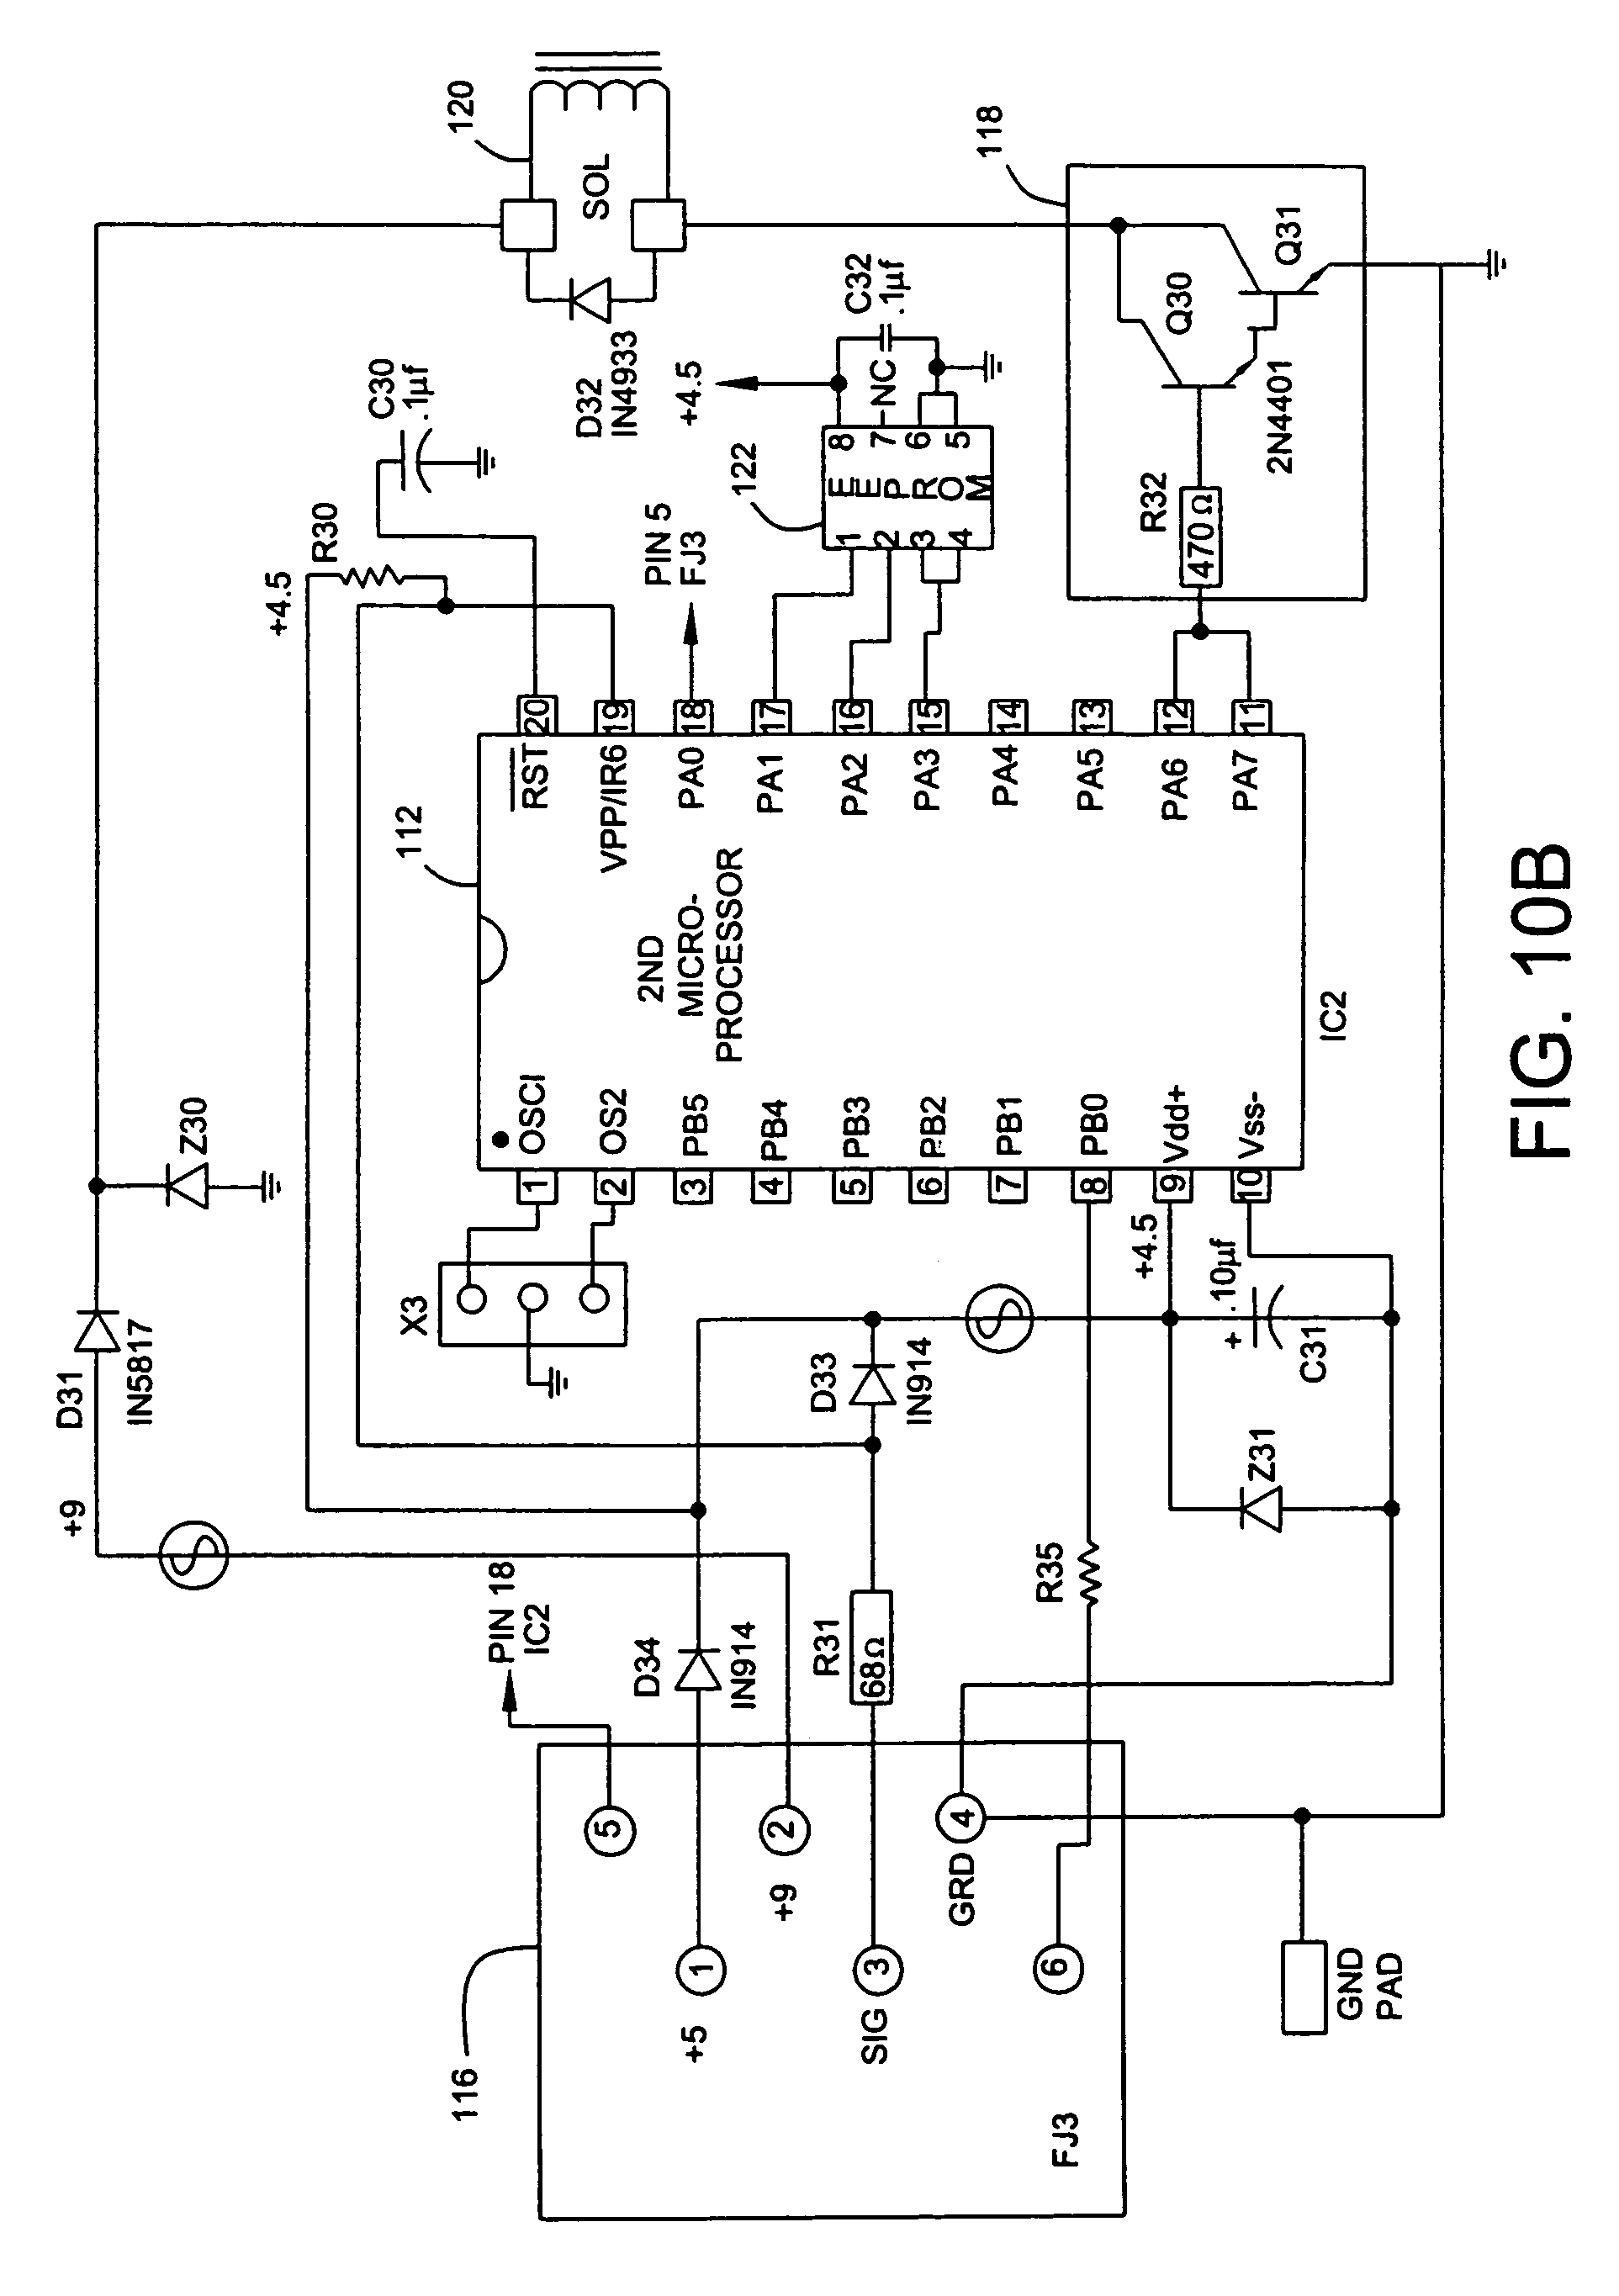 autopage rf-225 wiring diagram manual locks